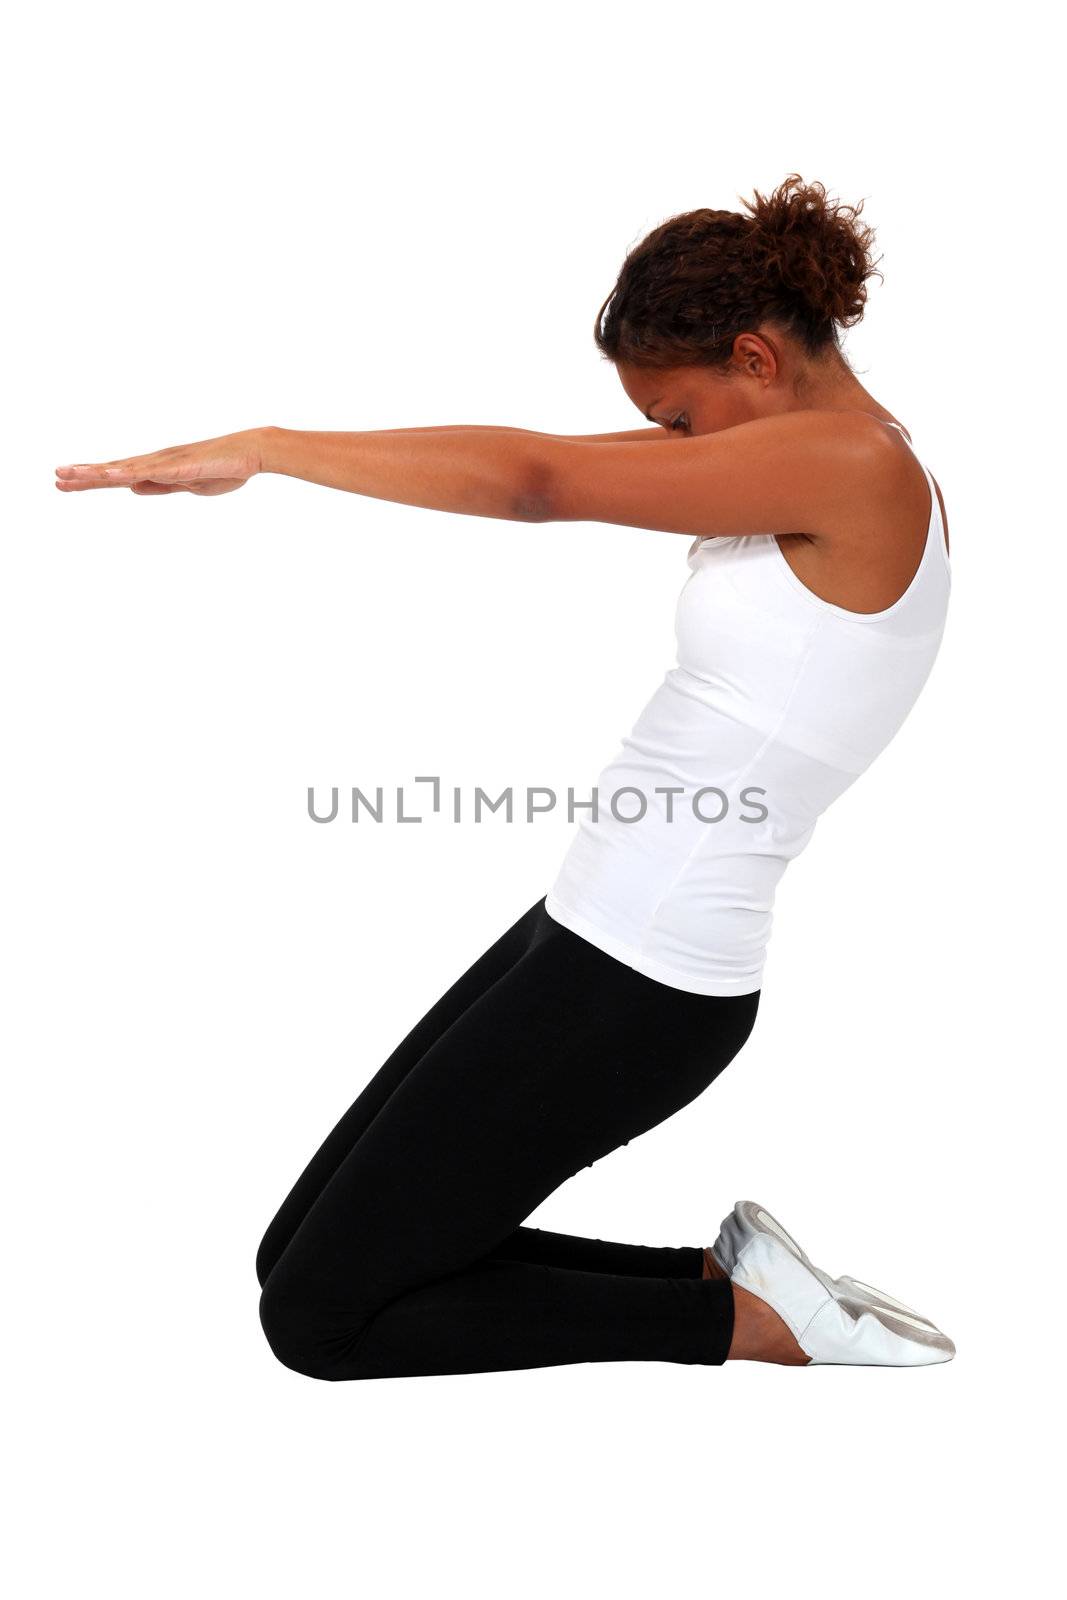 A yoga position by phovoir